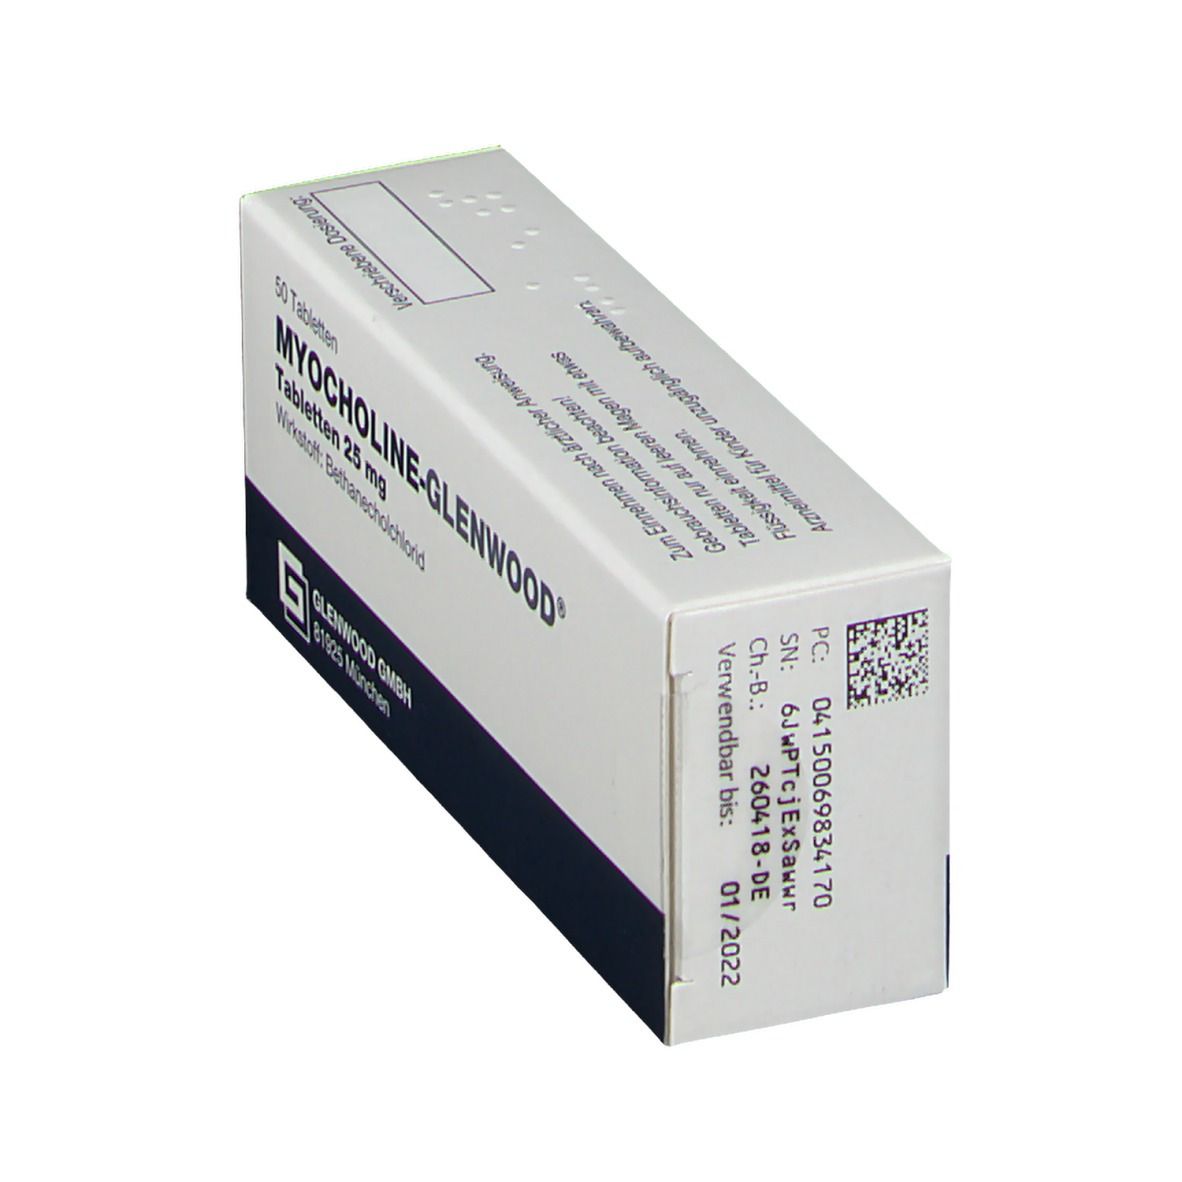 MYCHOLINE-GLENWOOD® 25 mg